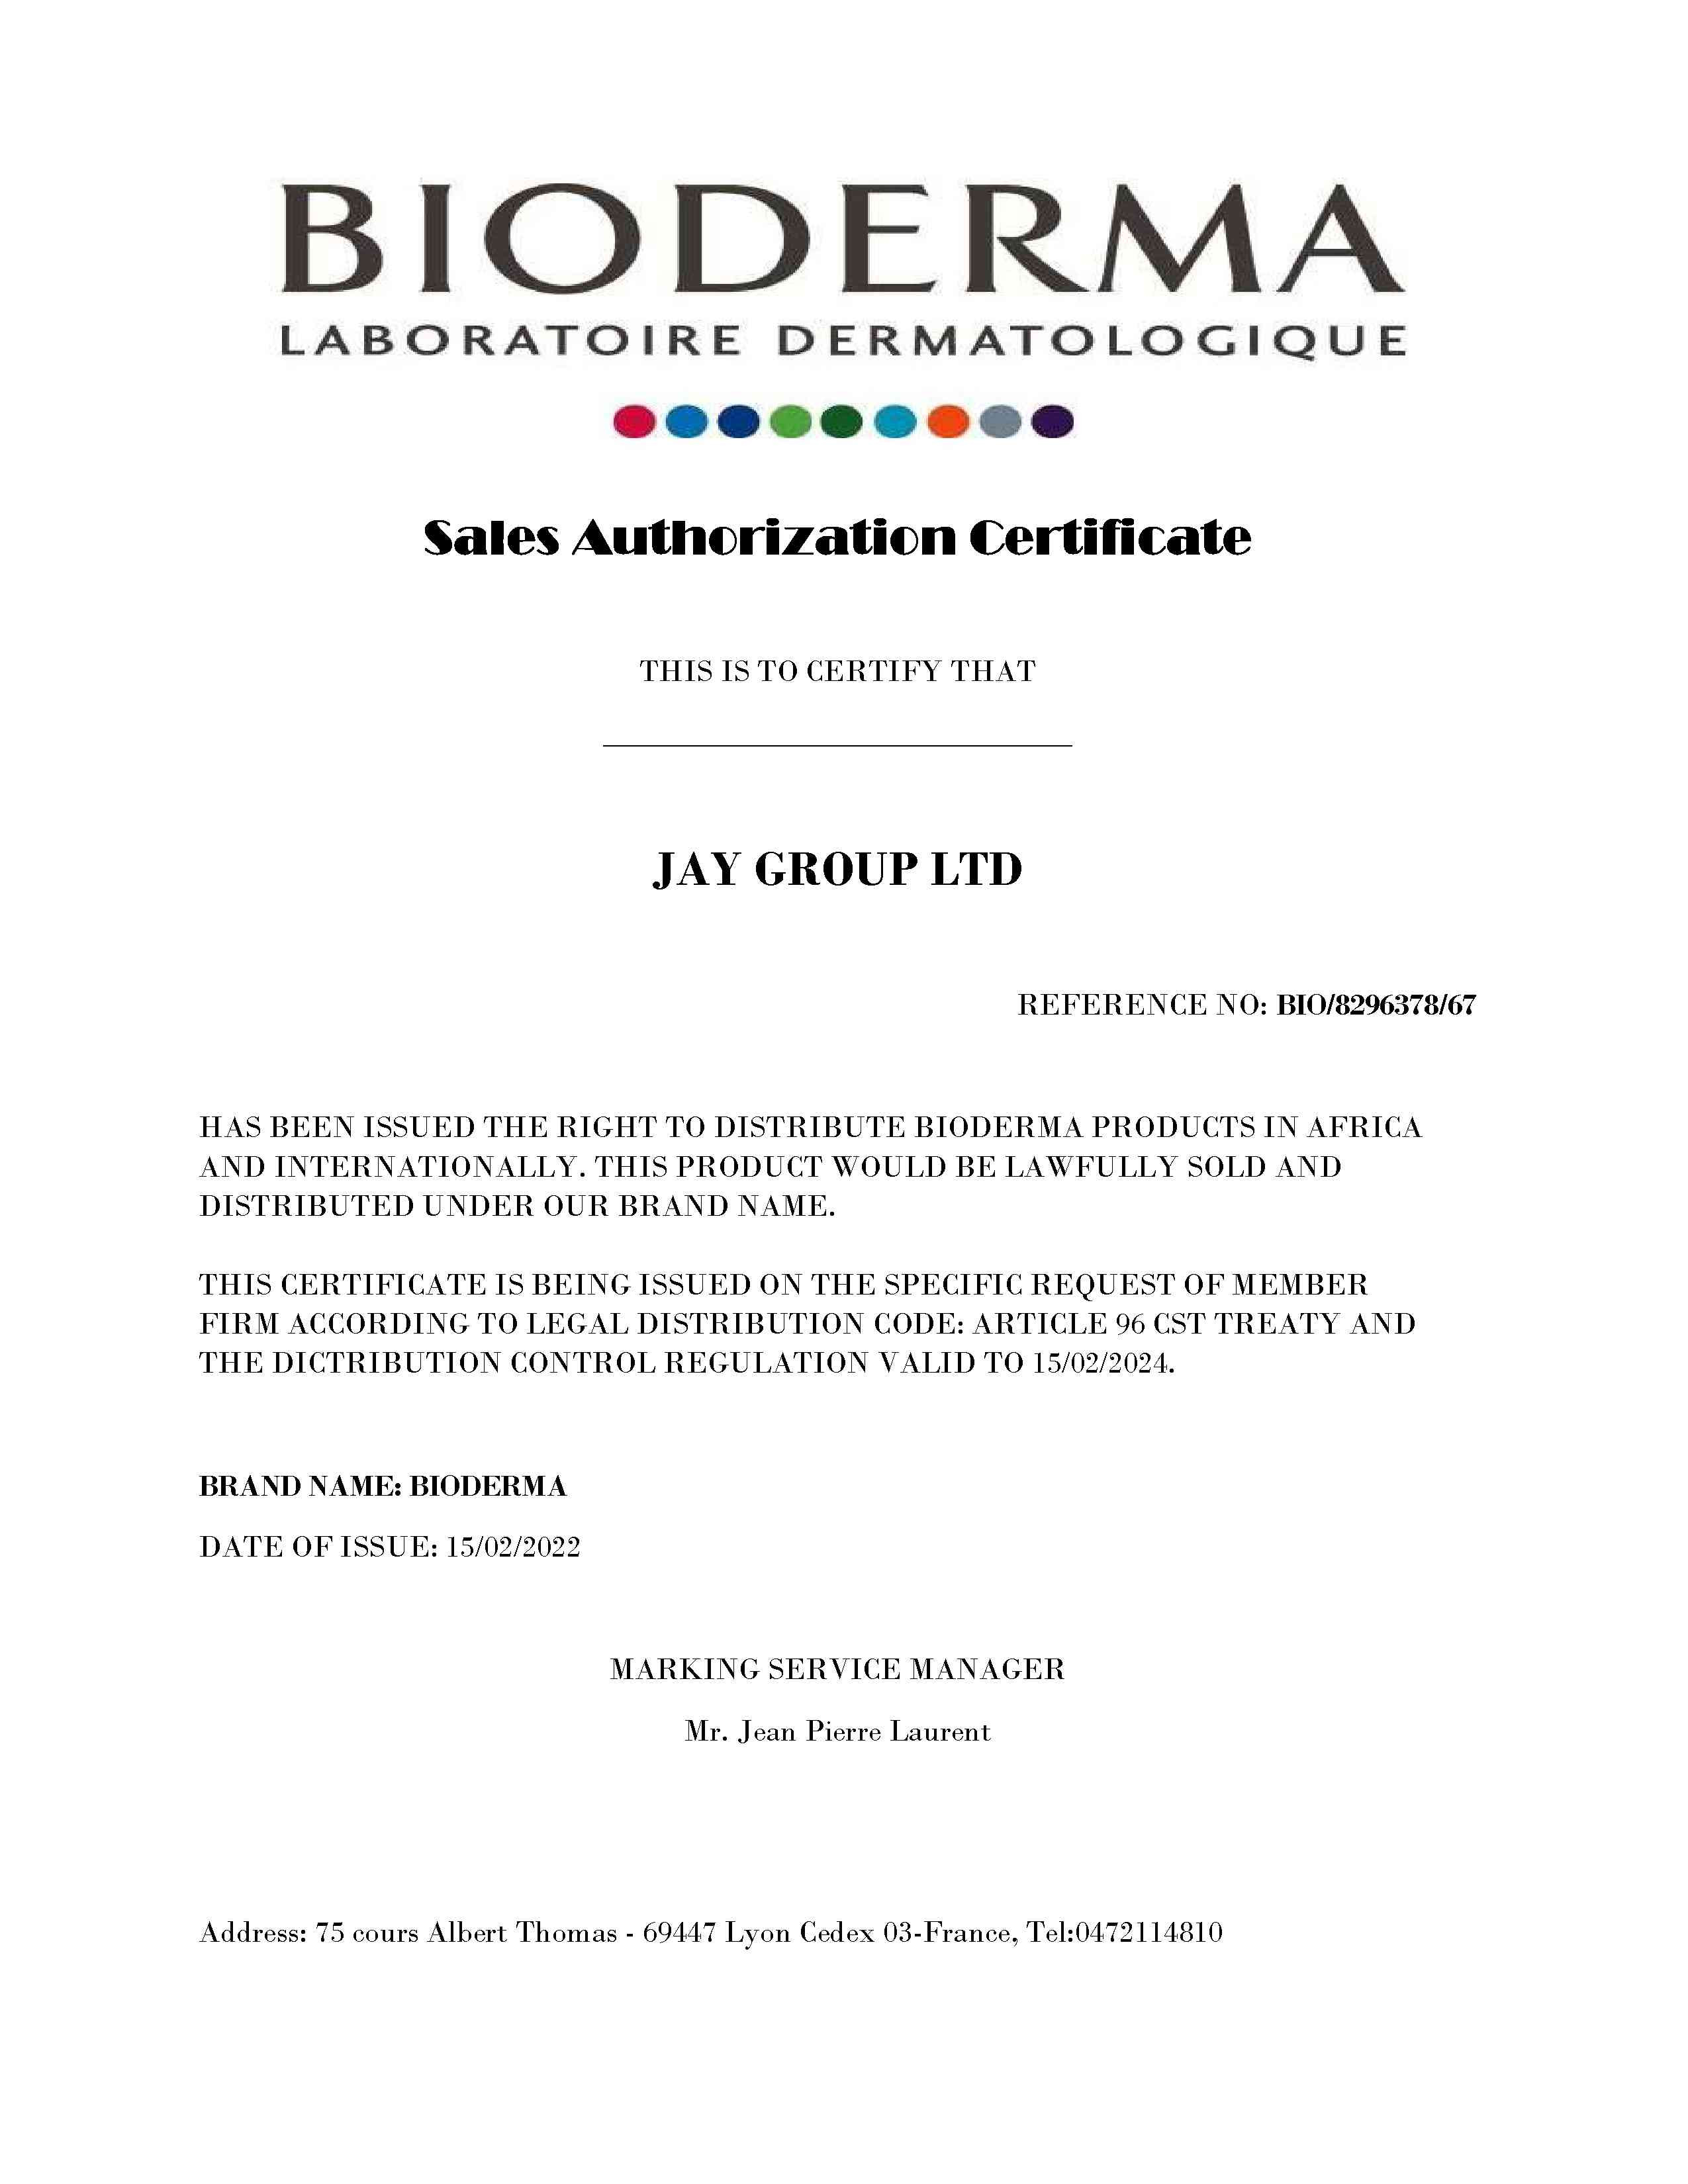 Bioderma Sales Authorization